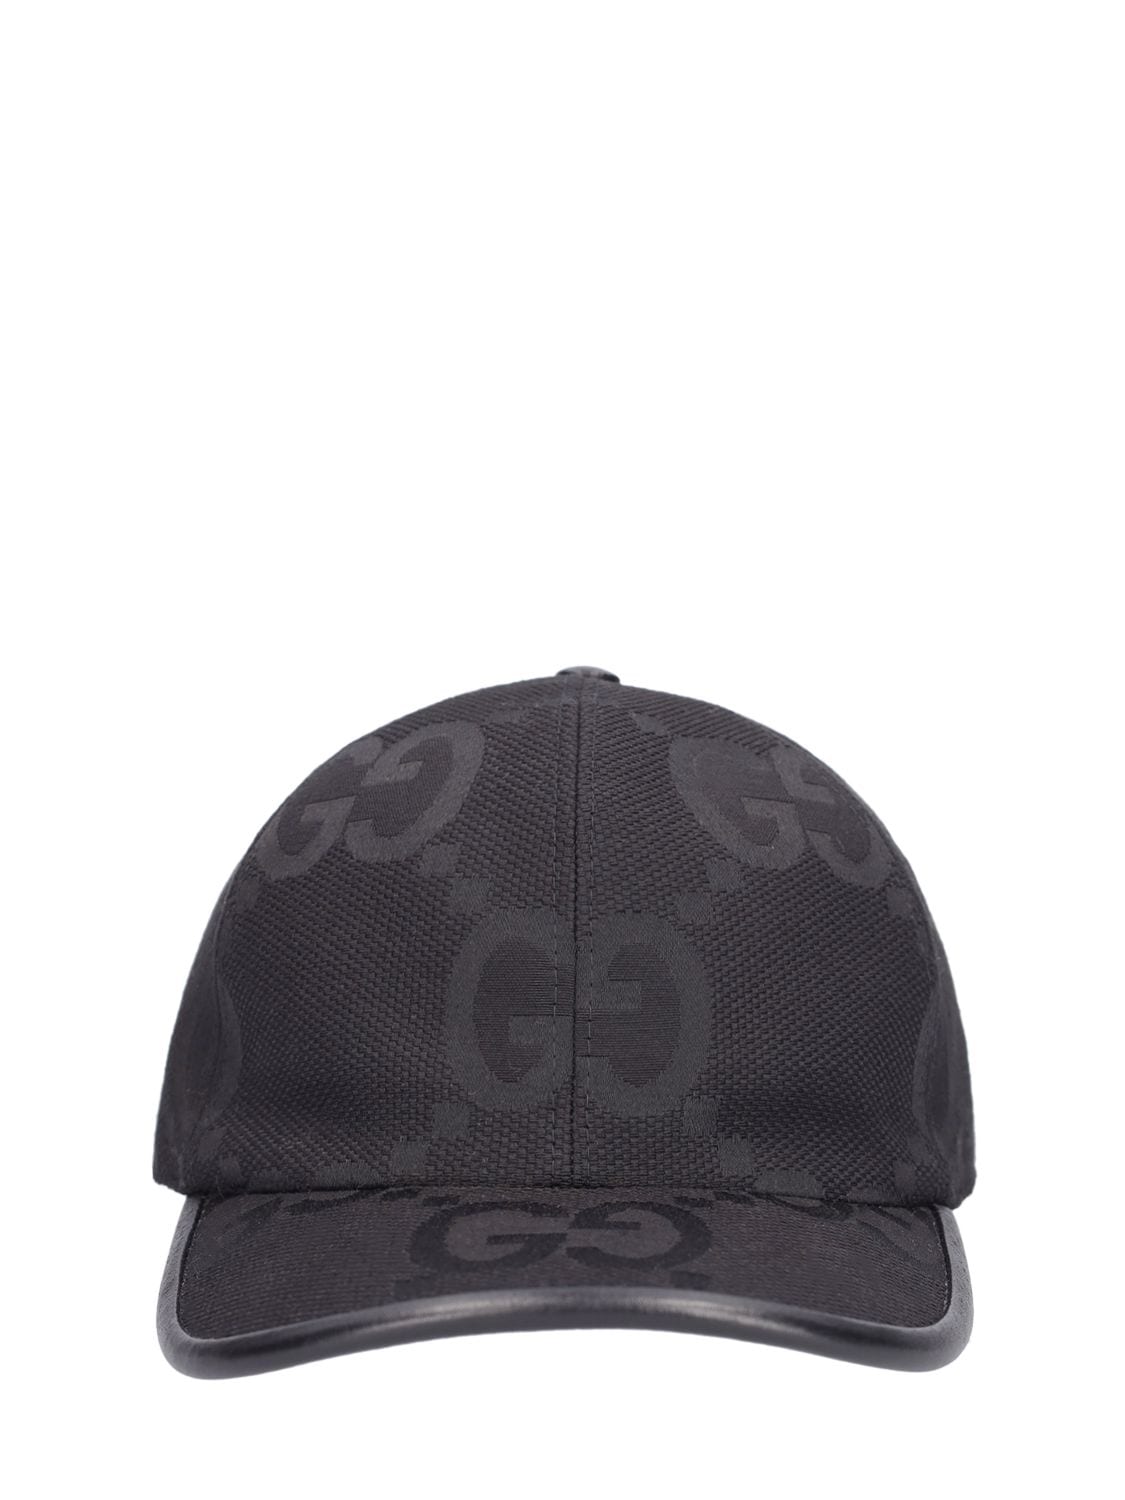 Gucci Men, GG Maxi baseball cap, Black, Patterned, M, Hats, Leather